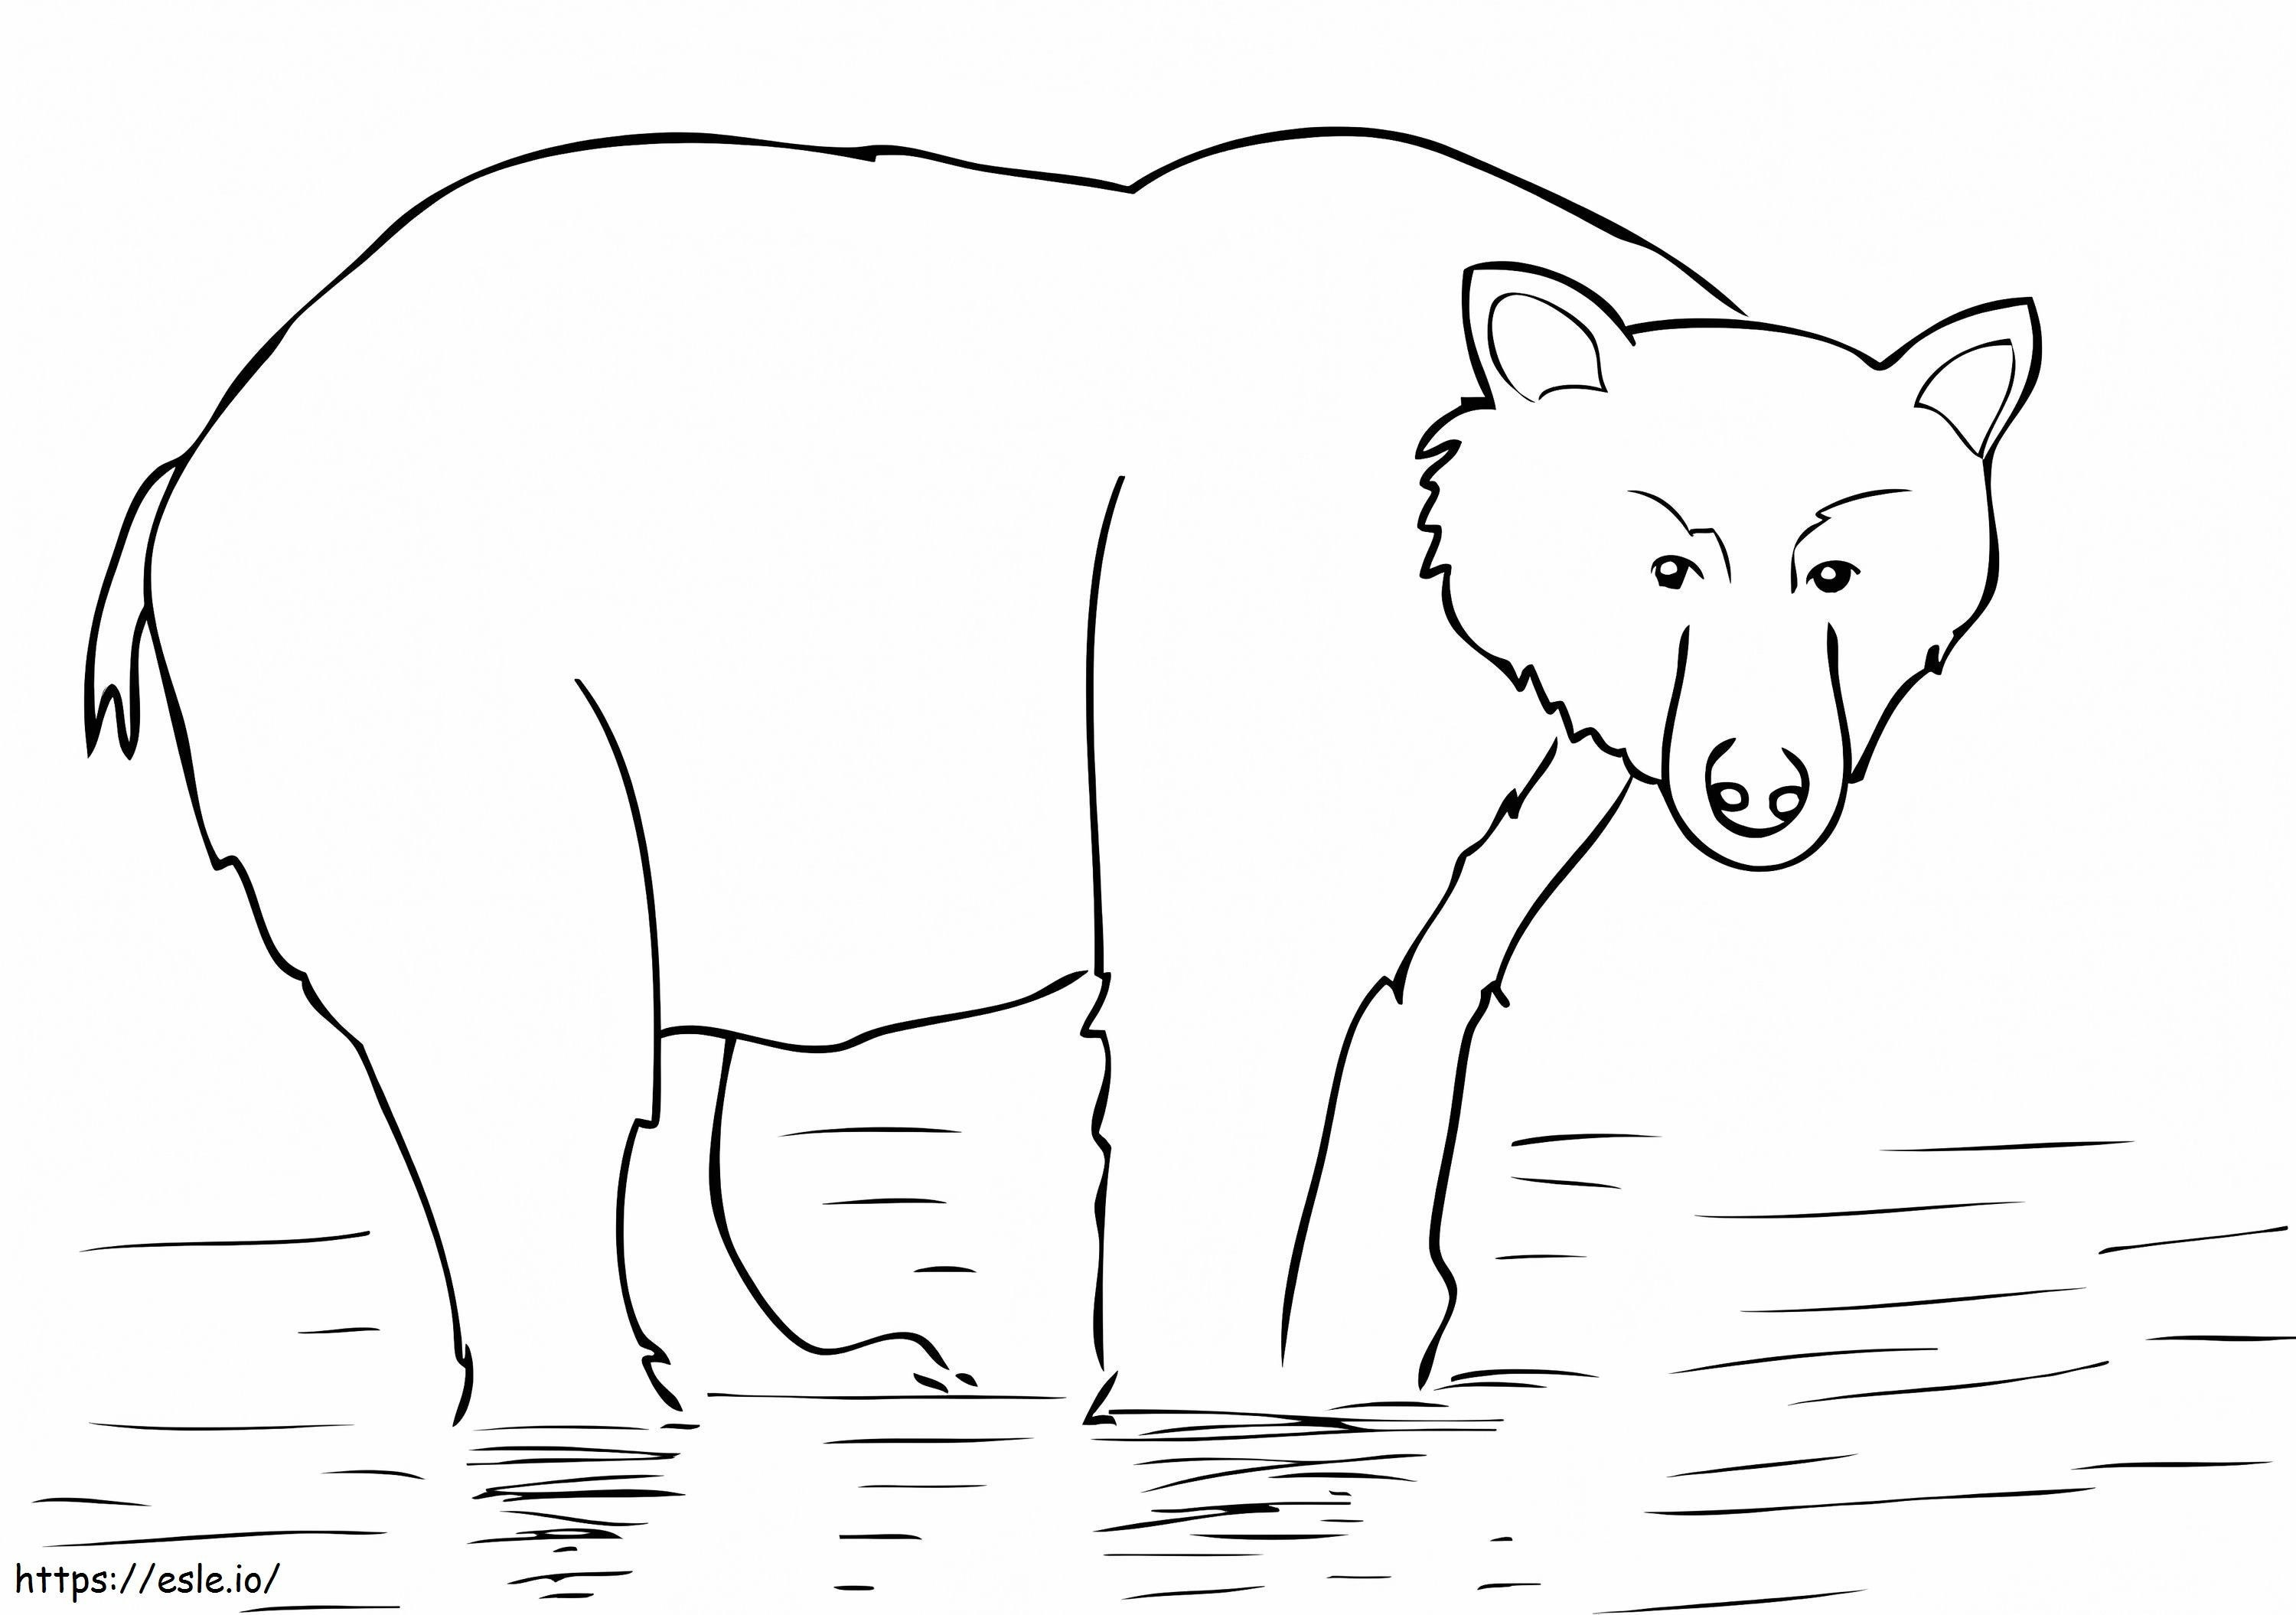 Alaska Brown Bear coloring page